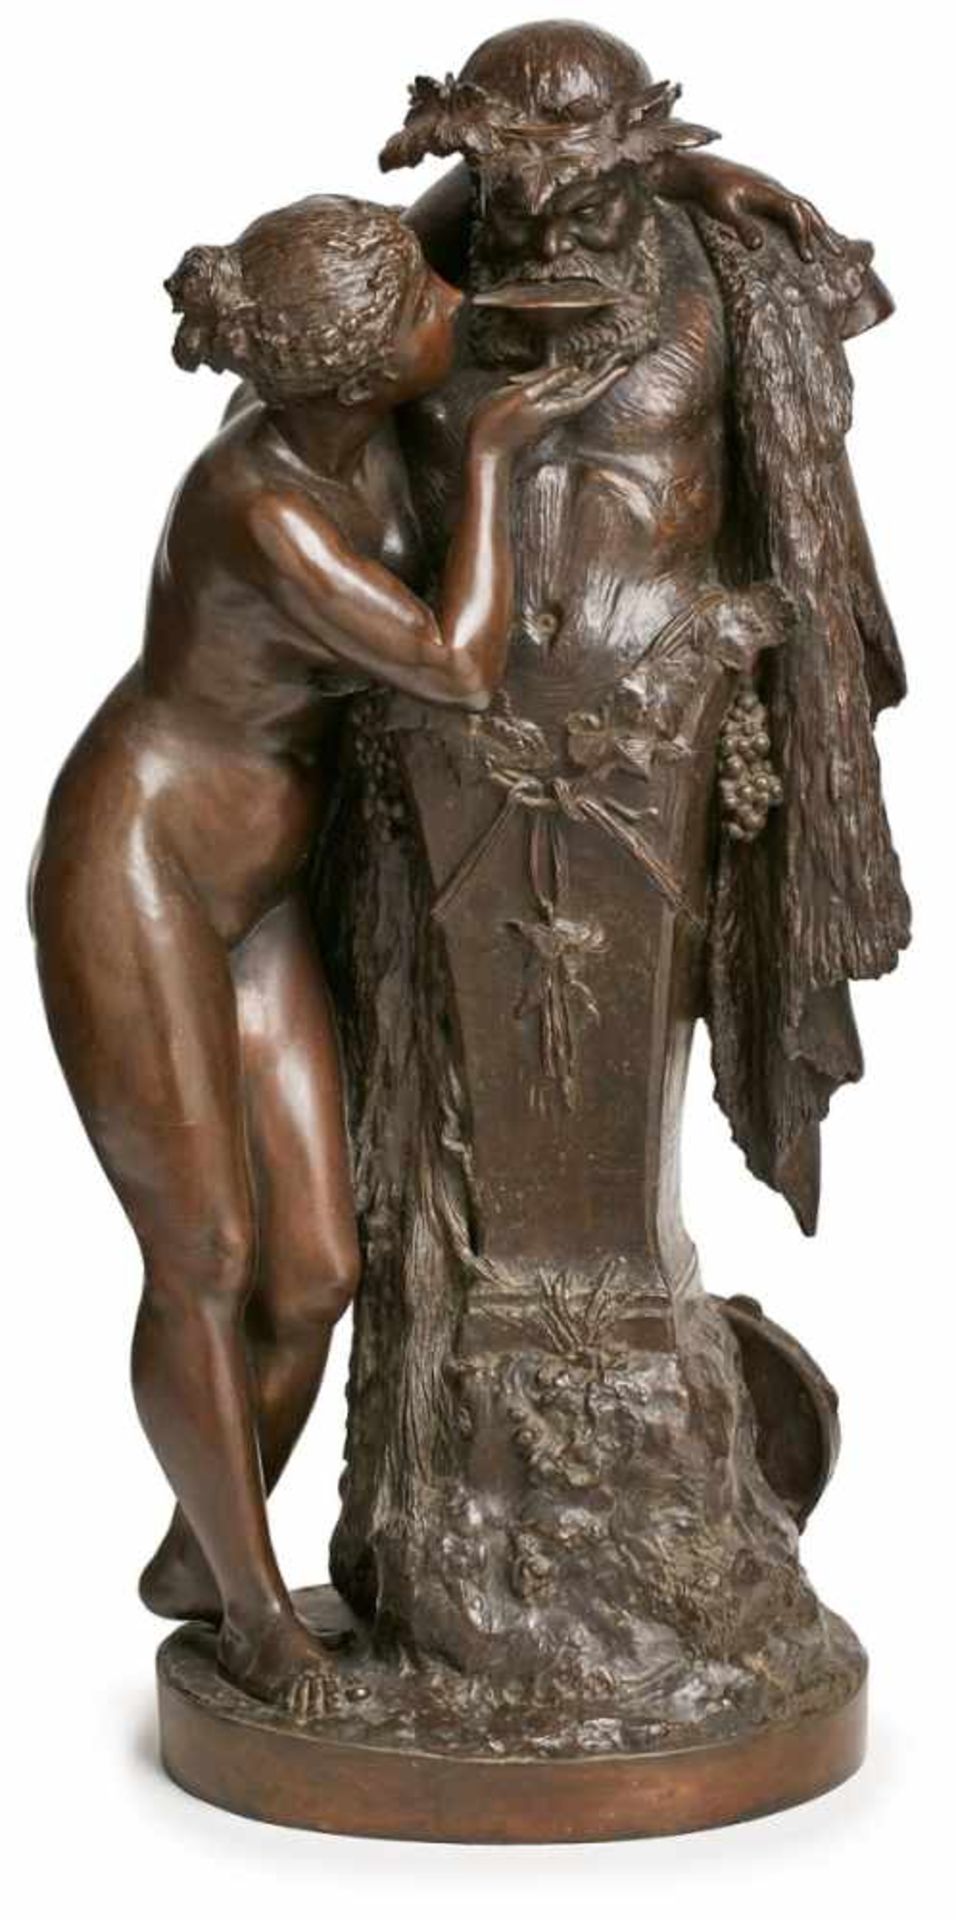 Gr. Bronzeskulptur August Sommer(1839 Coburg - 1921 ebenda) "Bacchantengruppe" um 1880. Braun